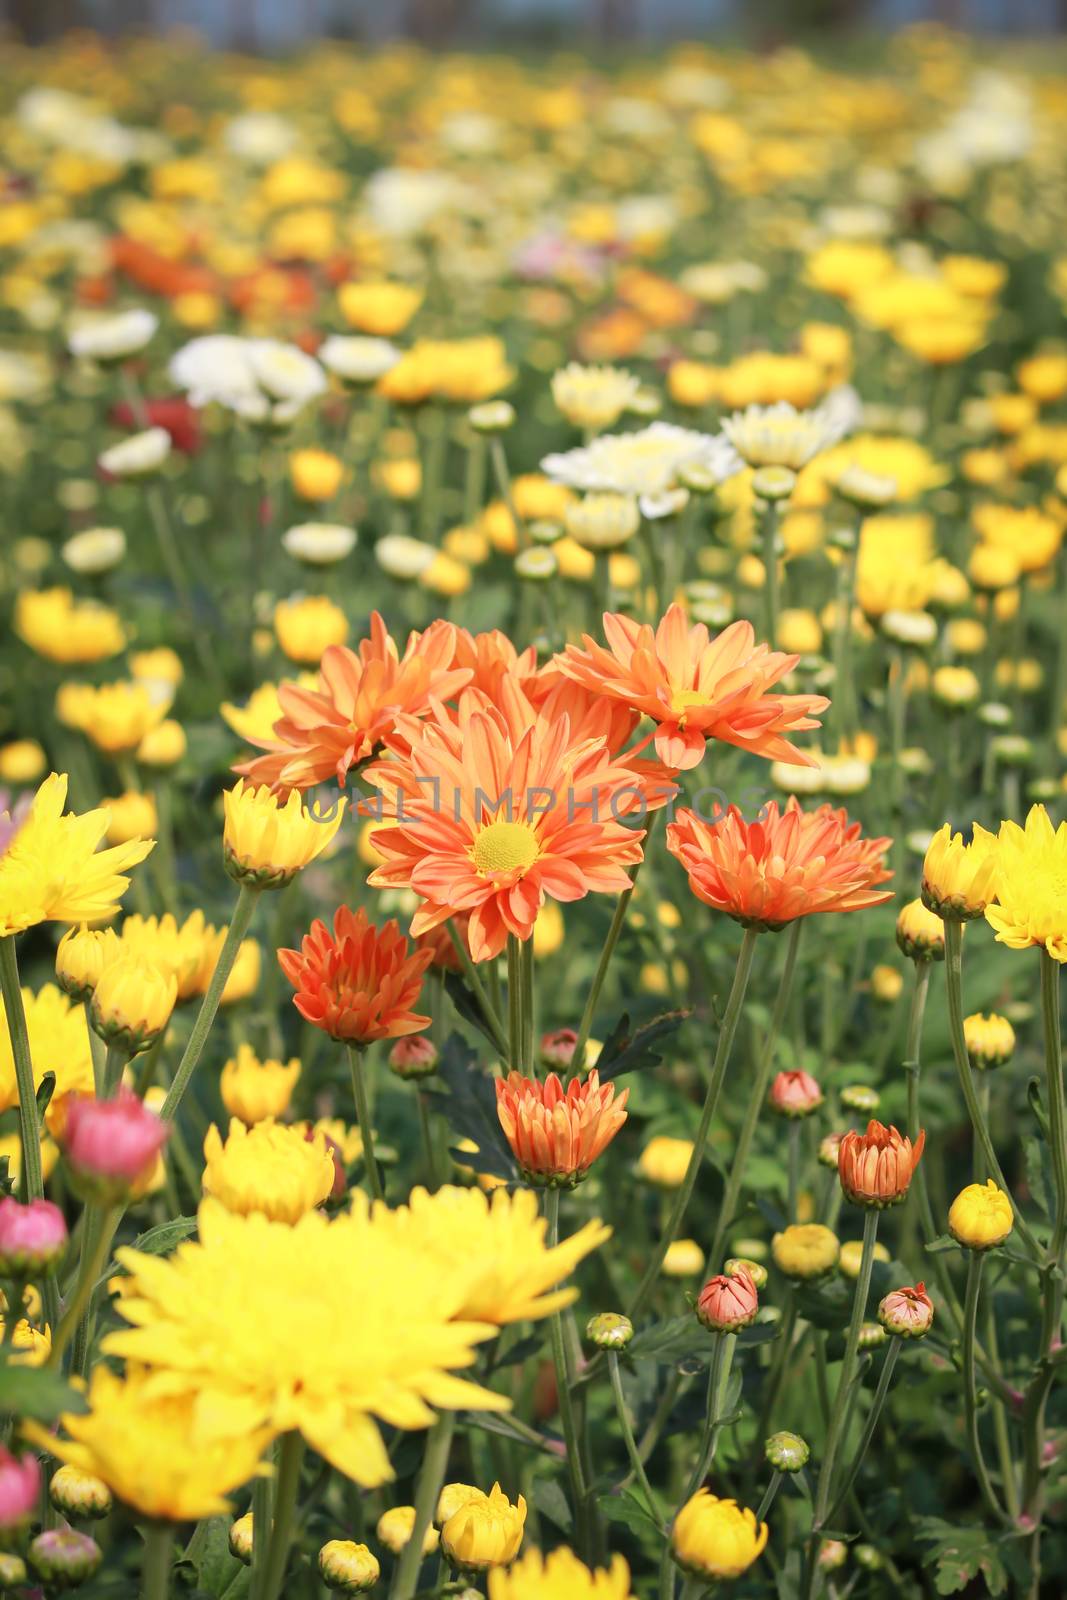 chrysanthemum Flowers in garden by powerbeephoto